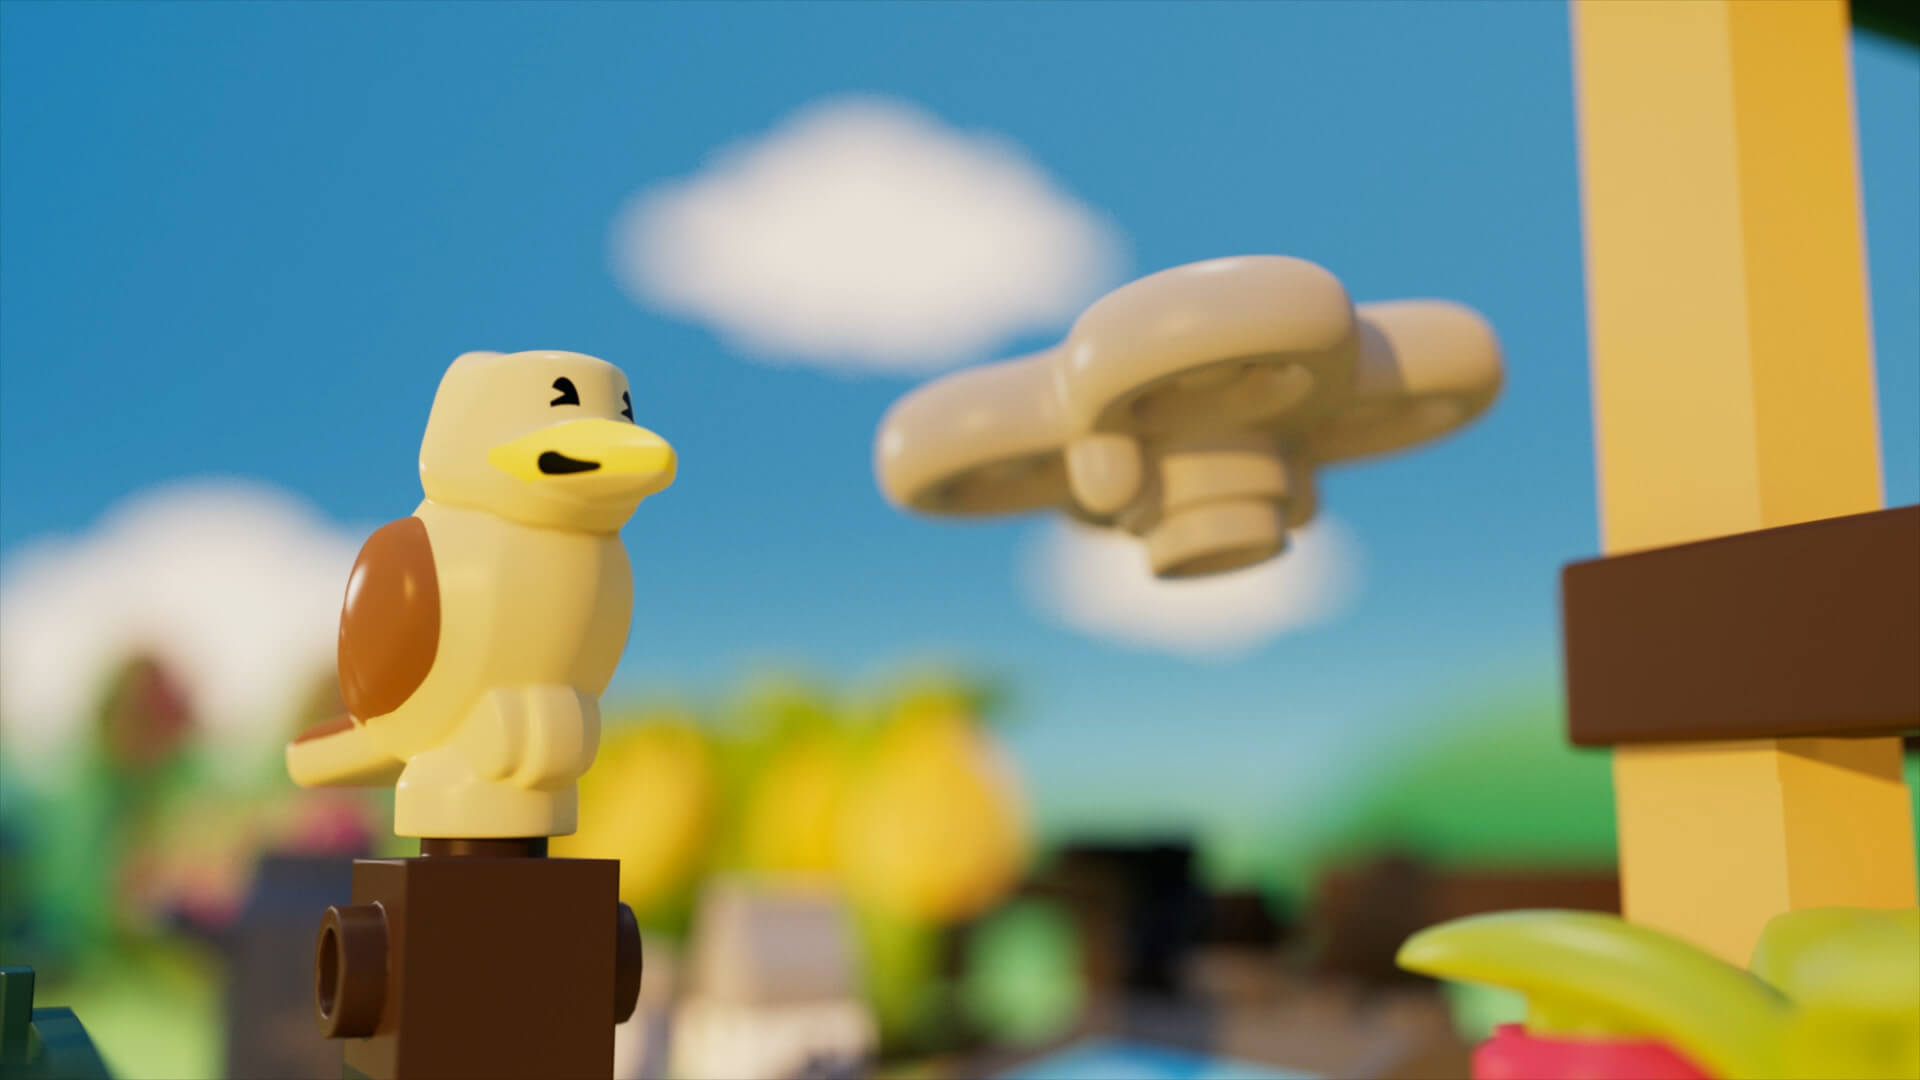 Image showing Woolworths Bricks Farm motion graphics animation frame showing kookaburra bird.